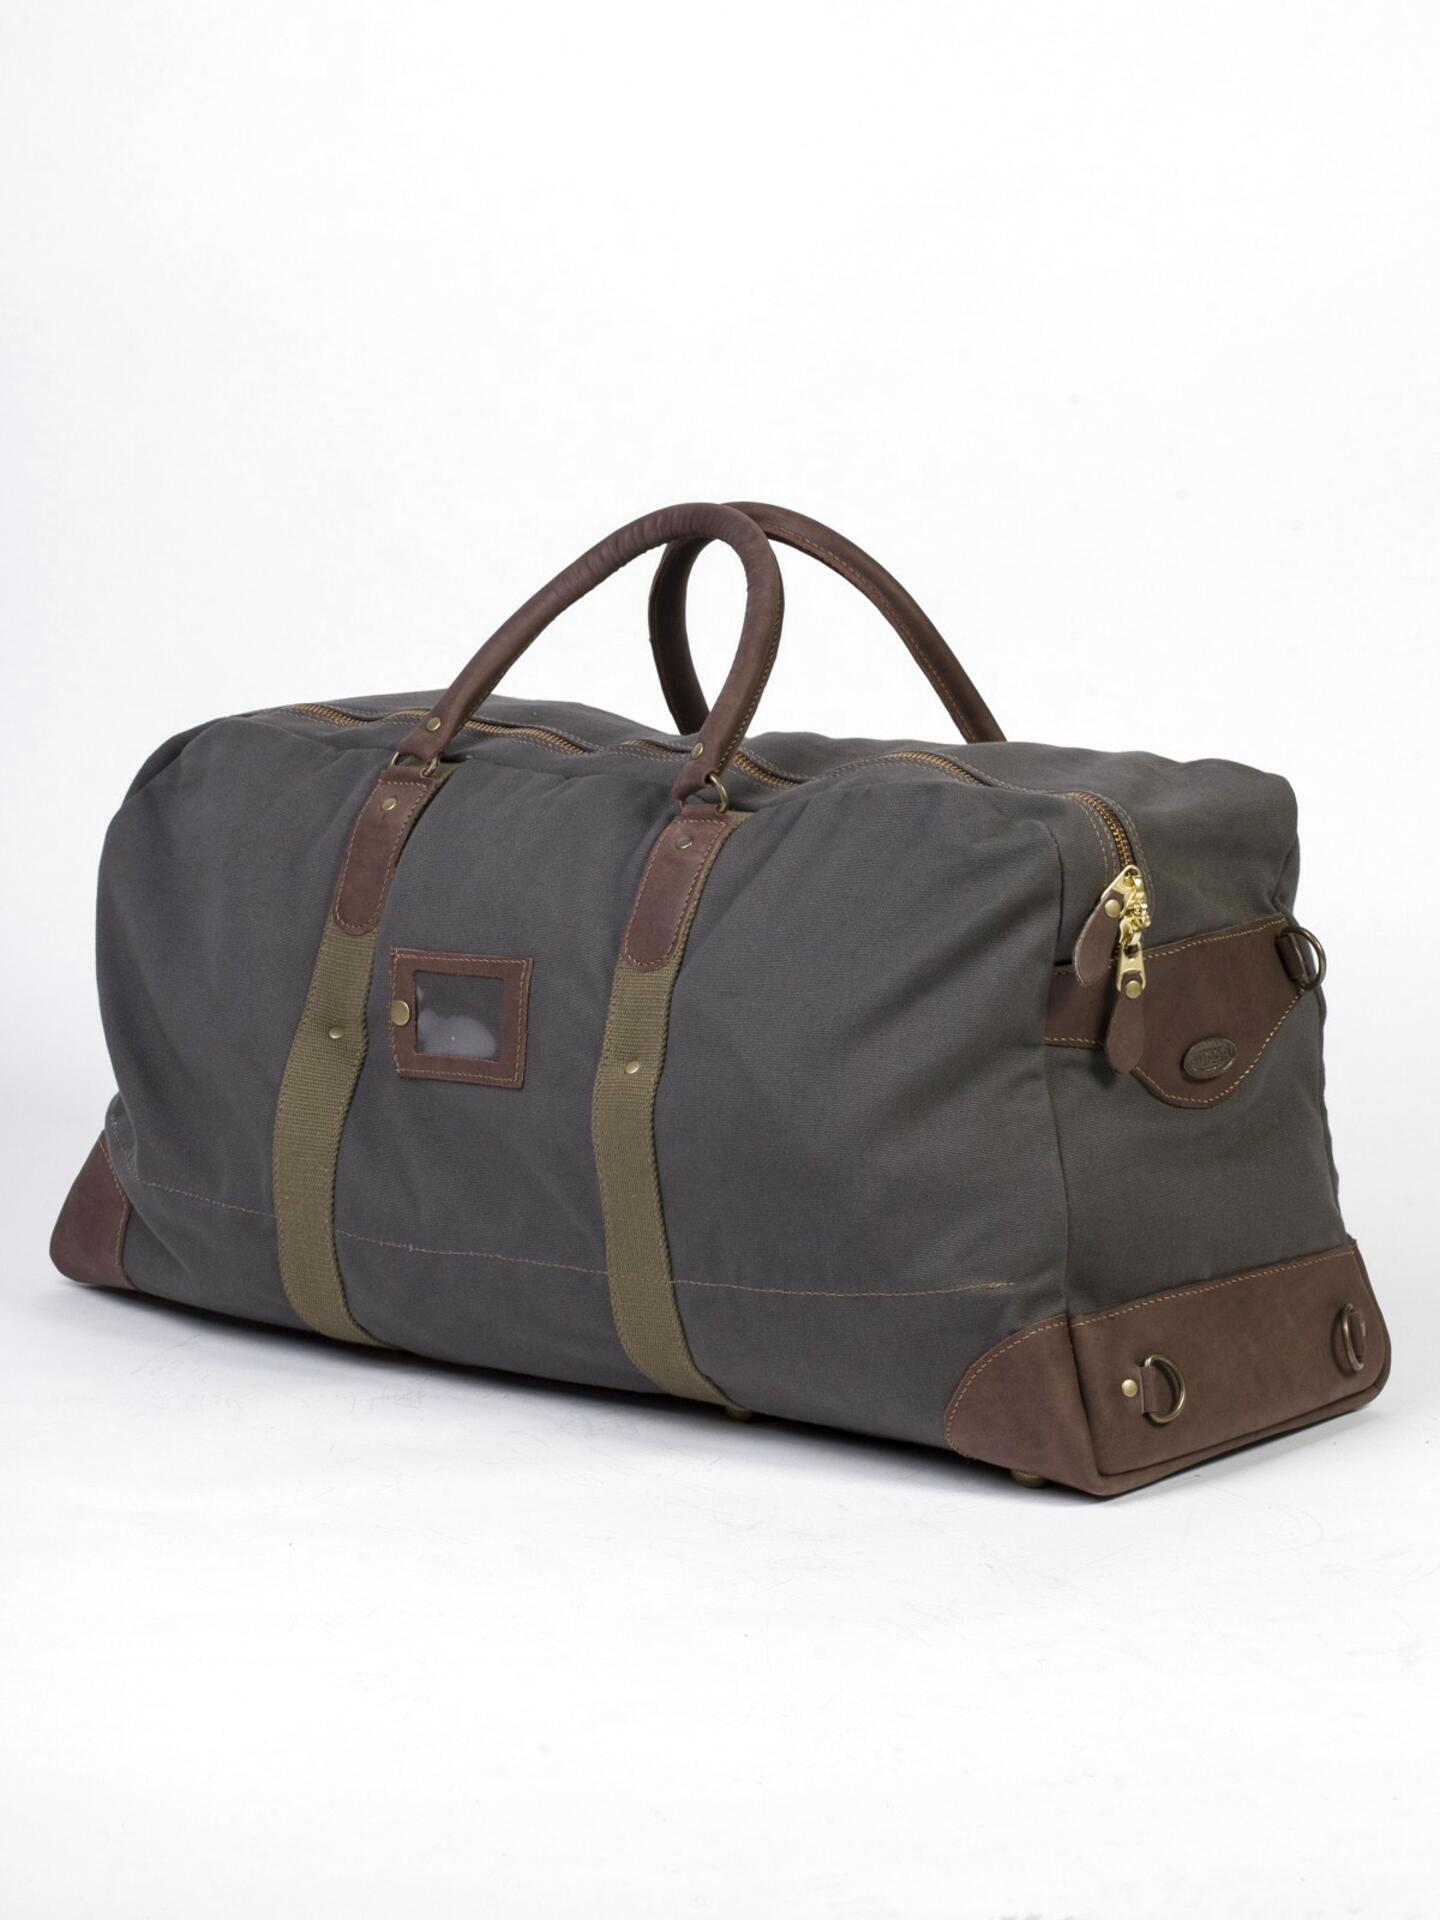 Raf Kit Bag for sale in UK | 59 used Raf Kit Bags